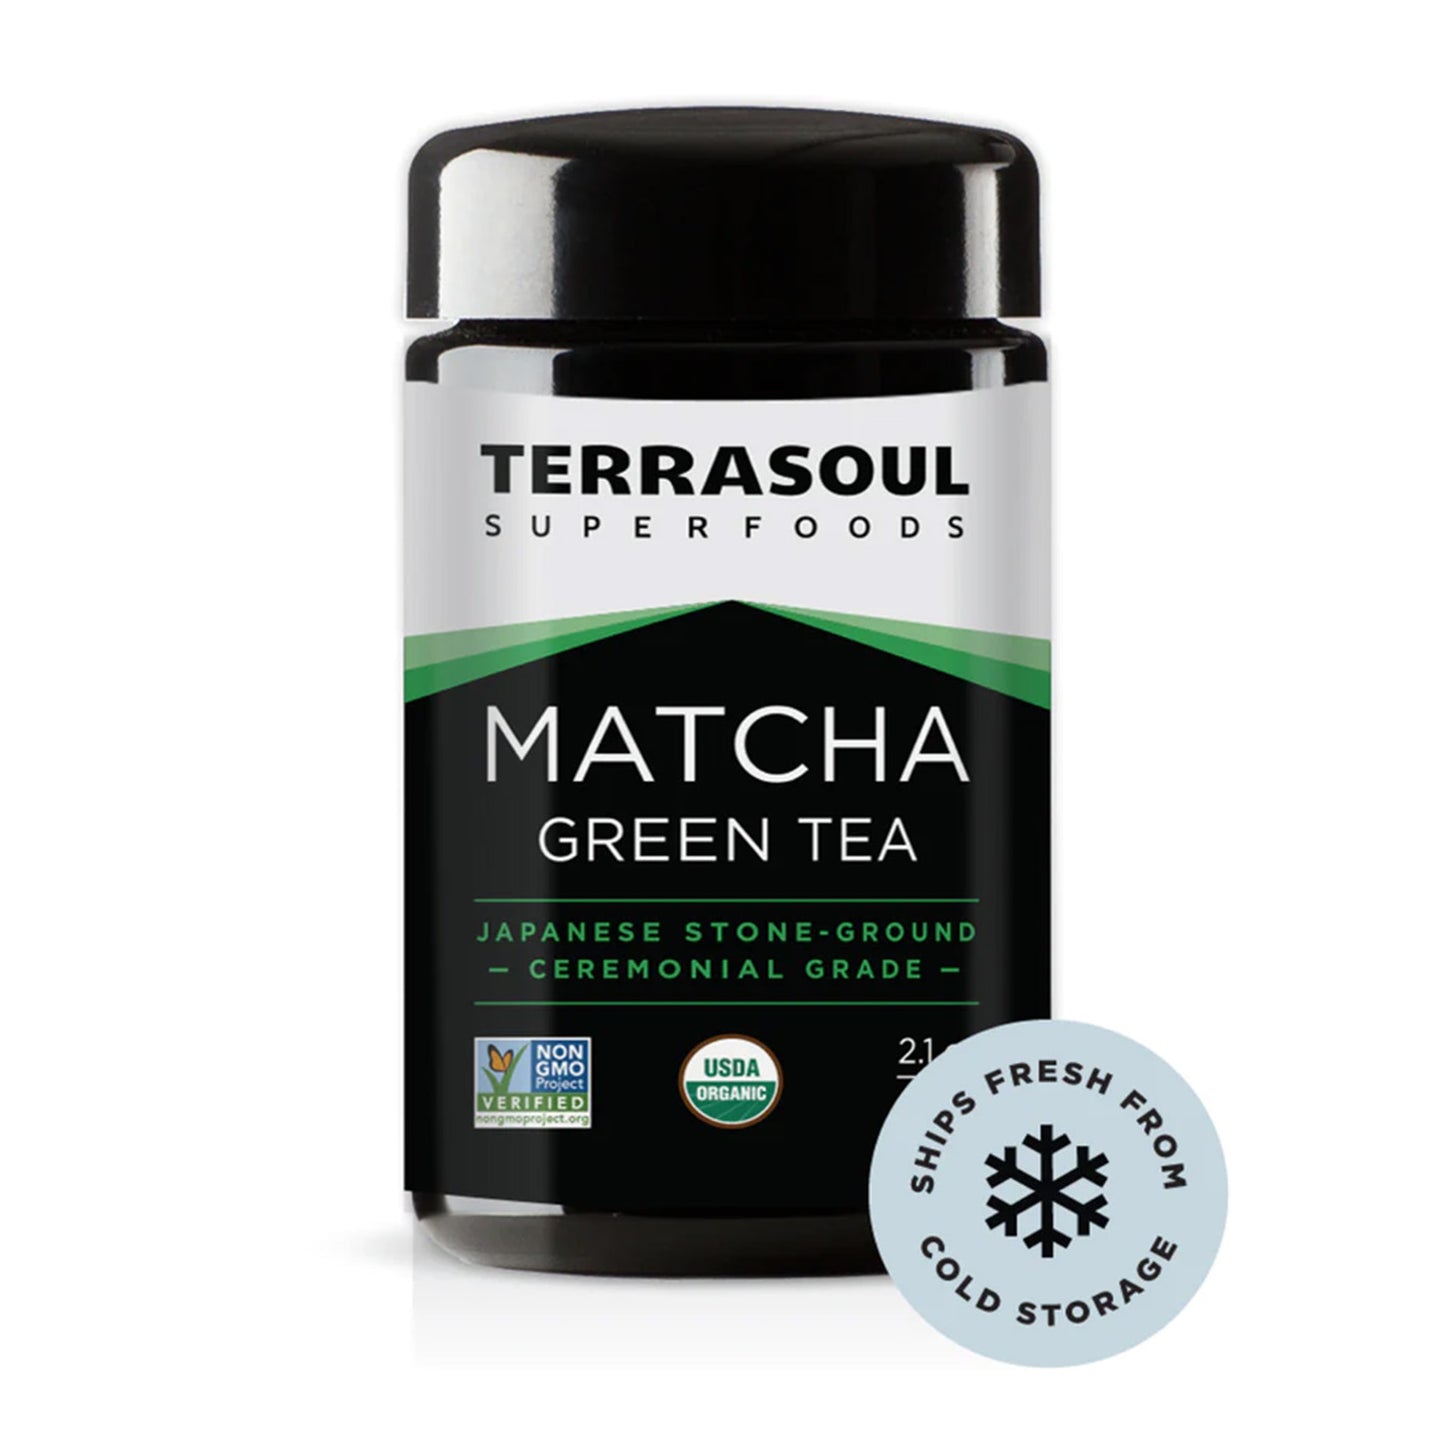 Vive el Poder Verde con Terrasoul Superfoods Matcha Green Tea Powder | ProHealth Shop [Panamá]